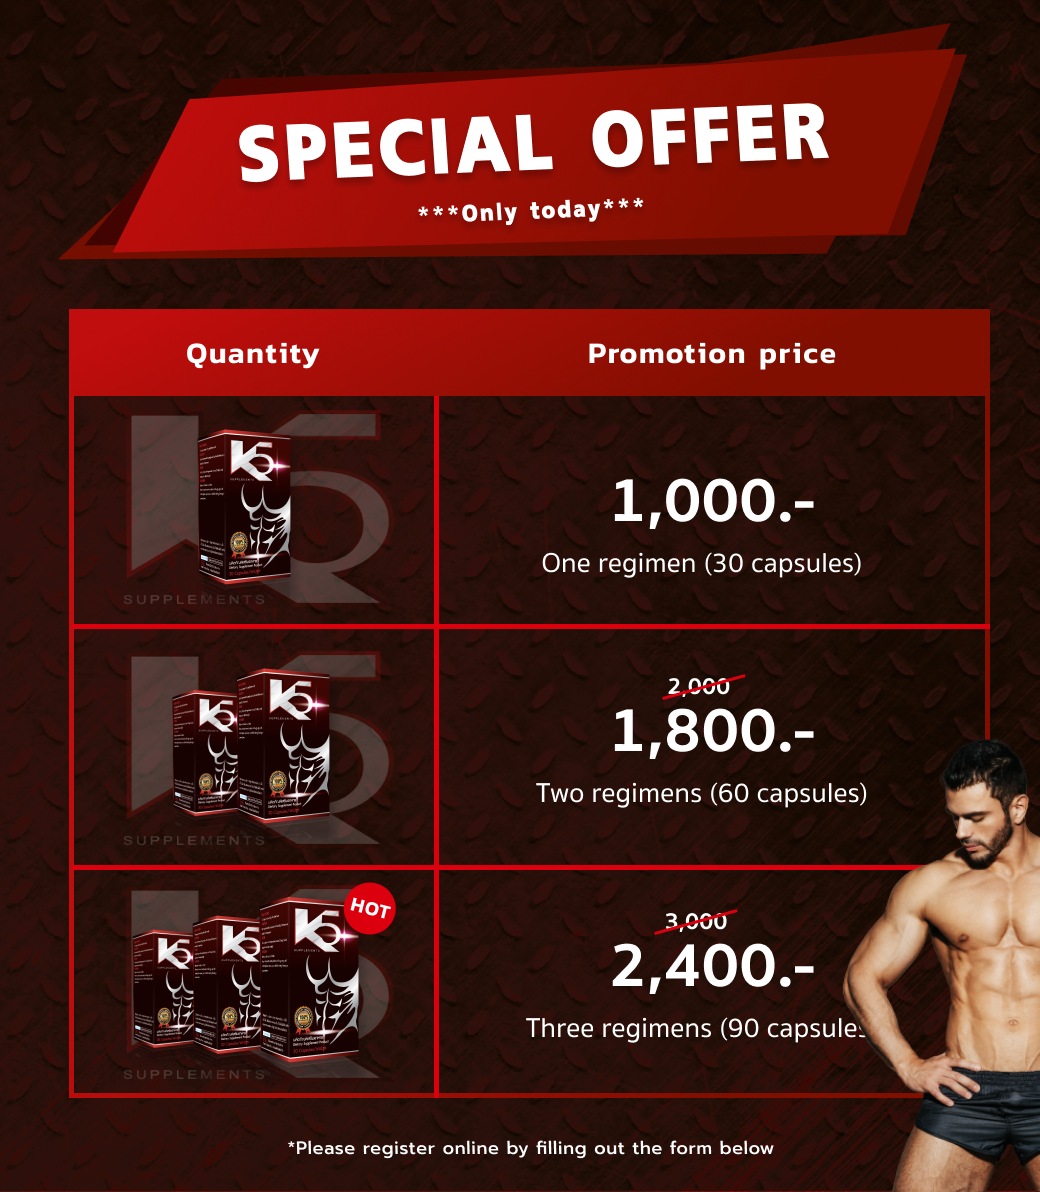 K5 Promotion price